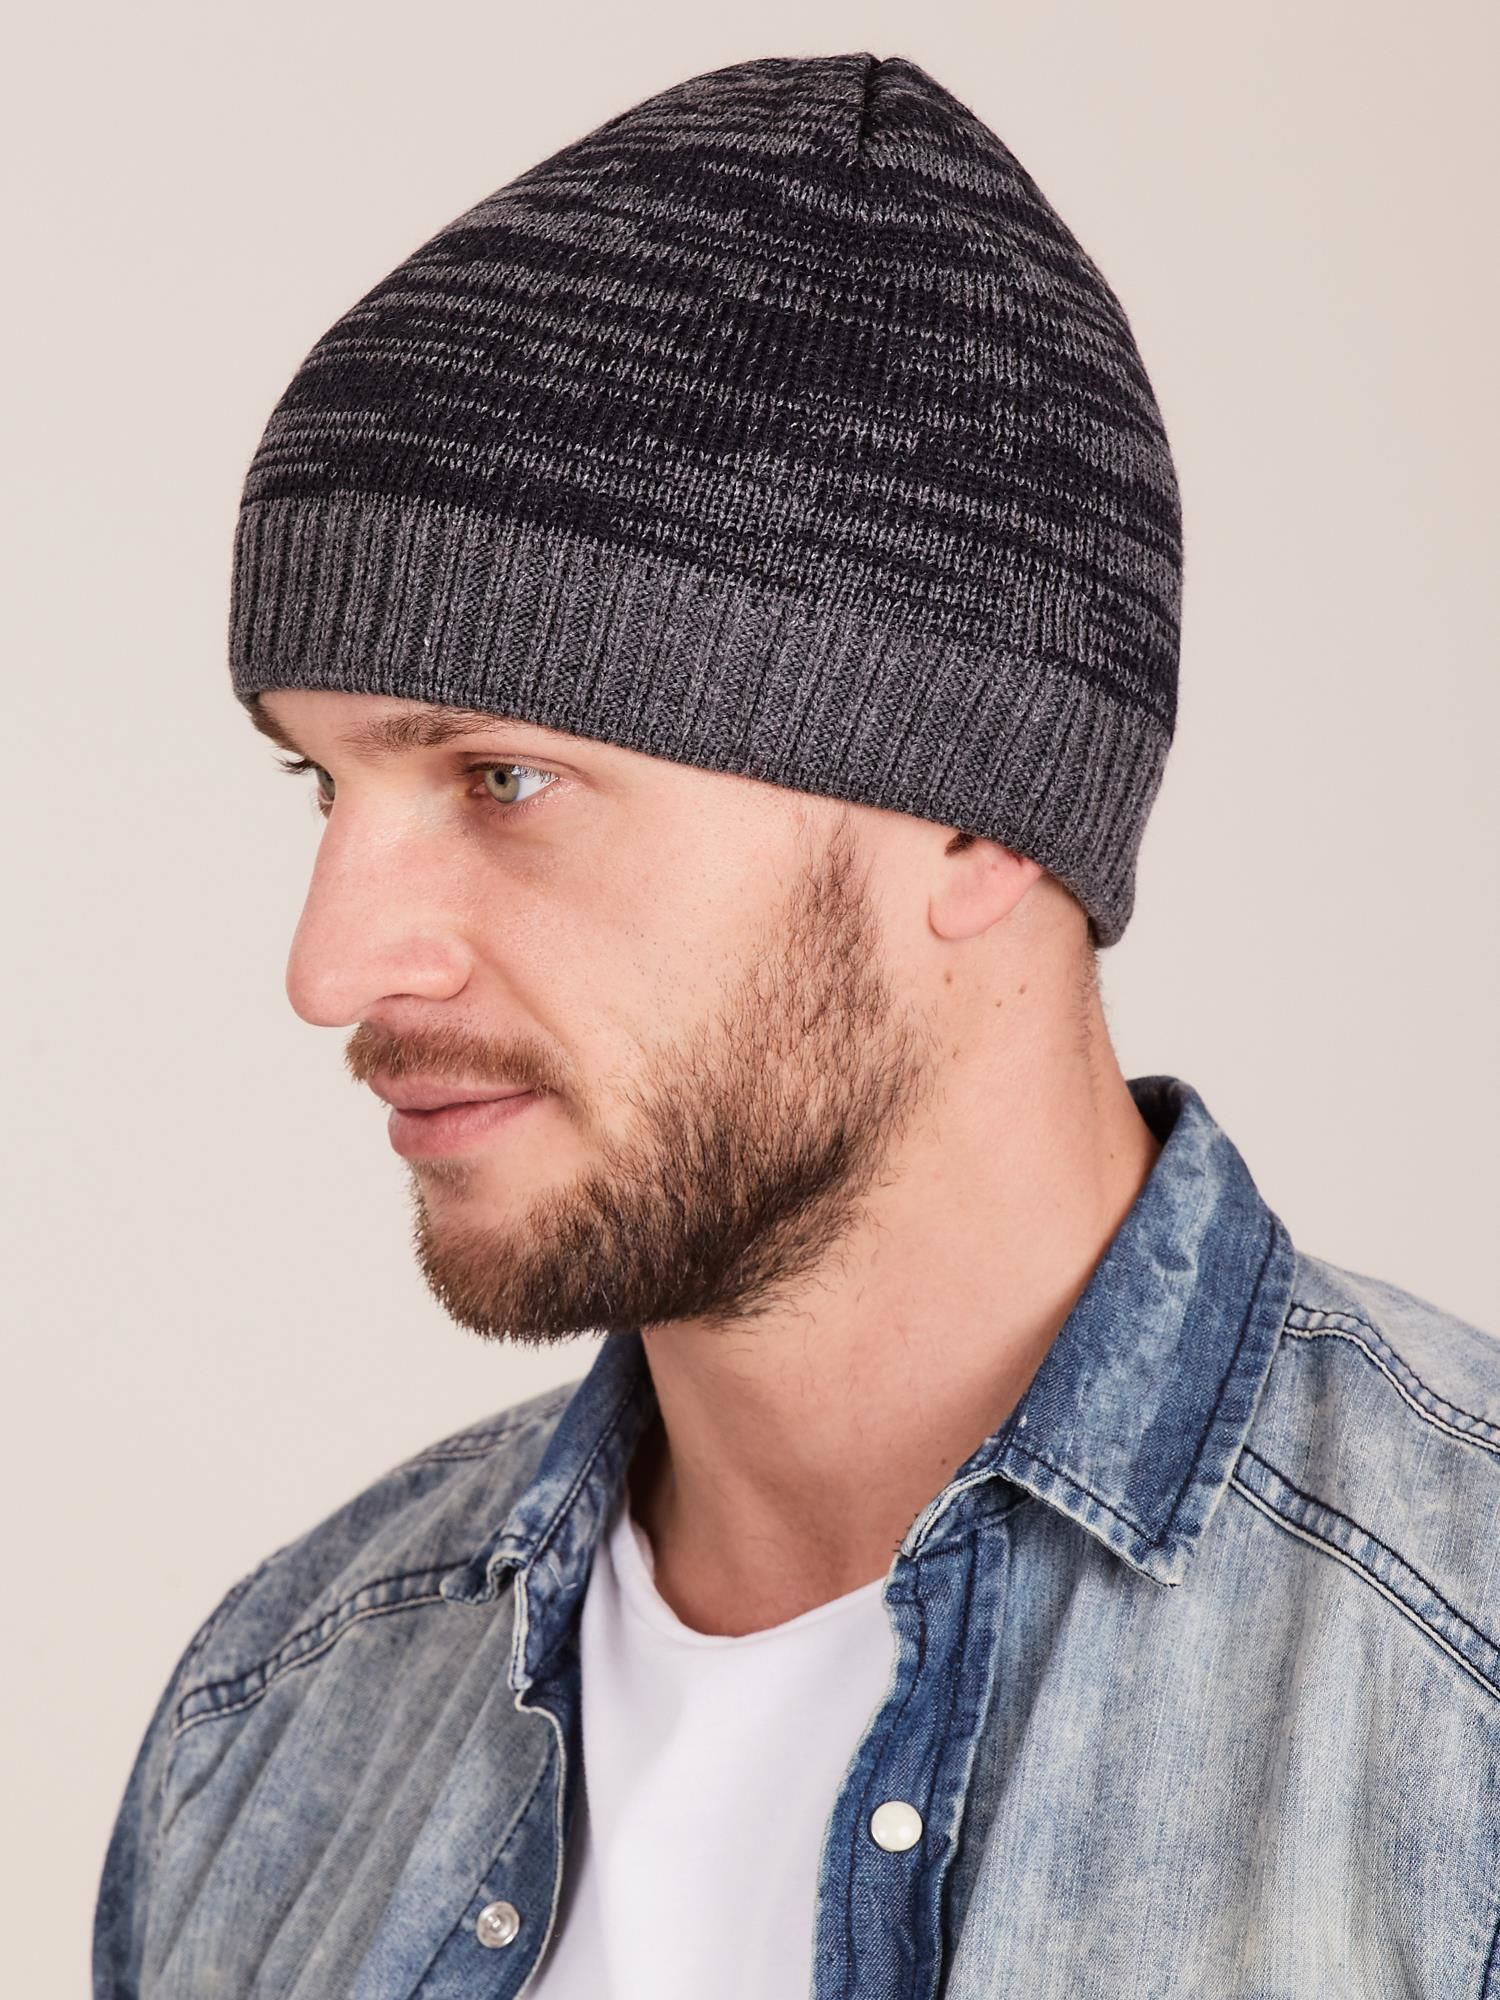 Wholesale Men's hat for winter gray